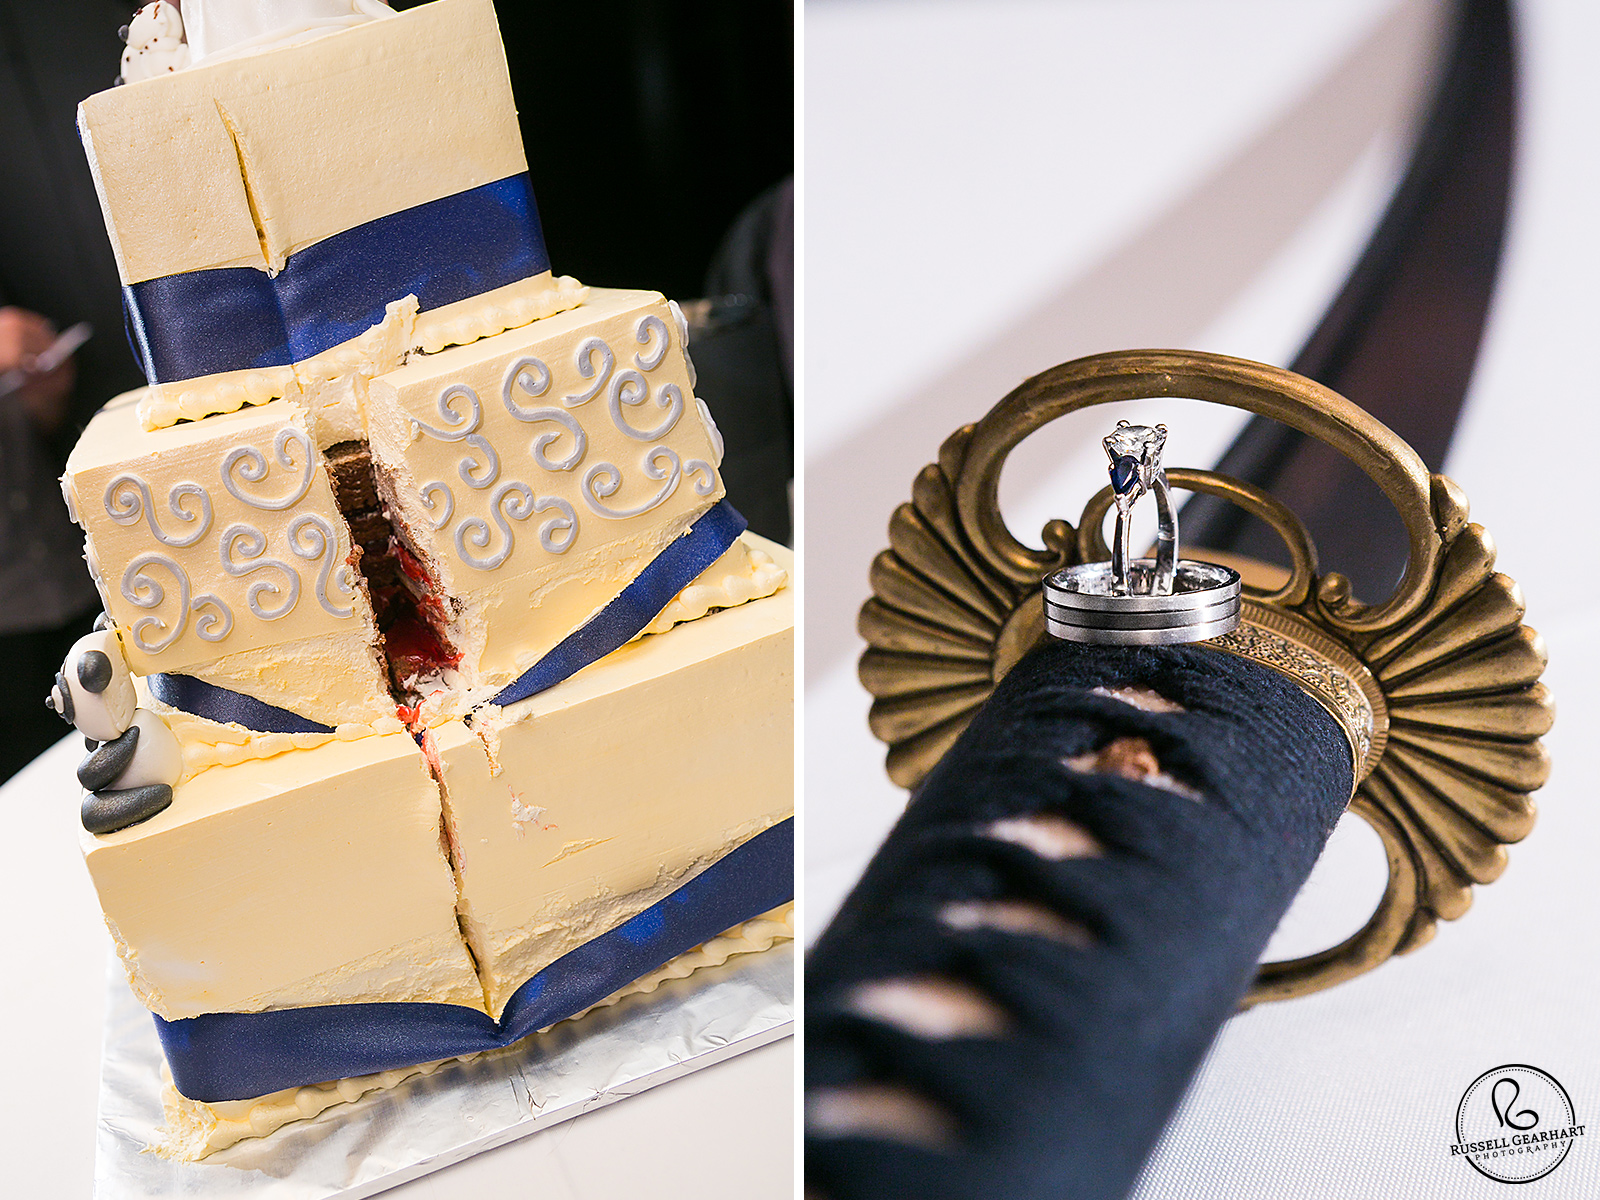 Sword Cake Cutting - Katana Sword and Wedding Rings - San Gabriel Valley Wedding – Russell Gearhart Photography – www.gearhartphoto.com